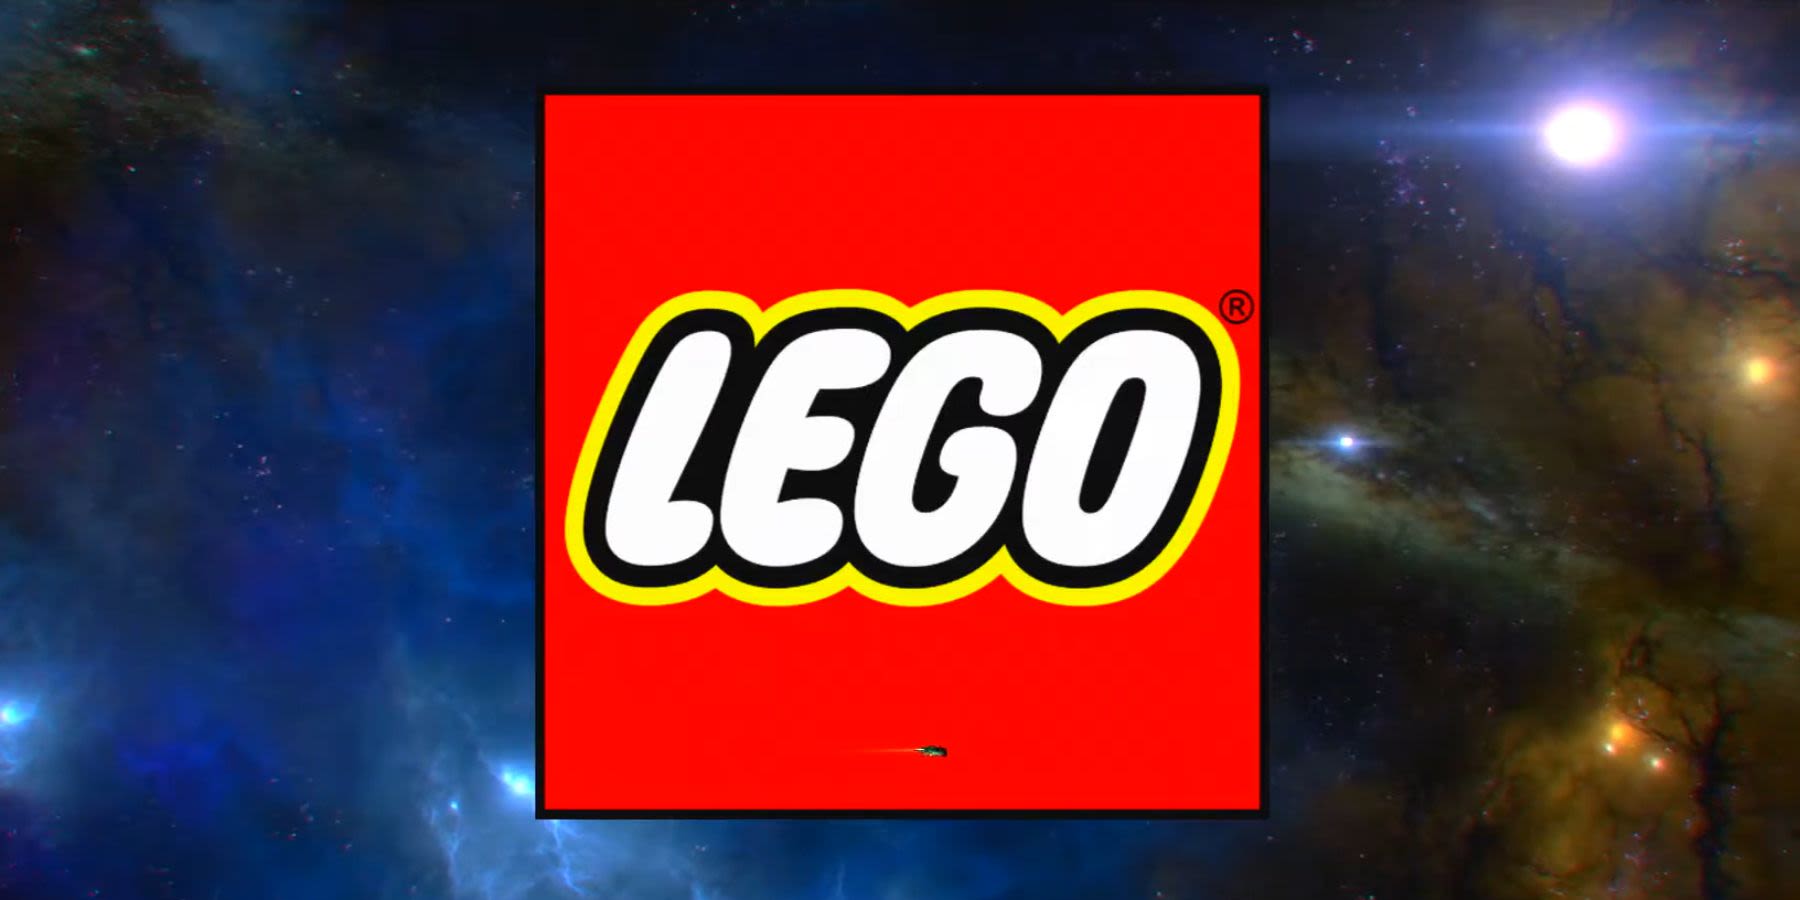 LEGO's Zelda Set Should Be Just The Tip of The Iceberg